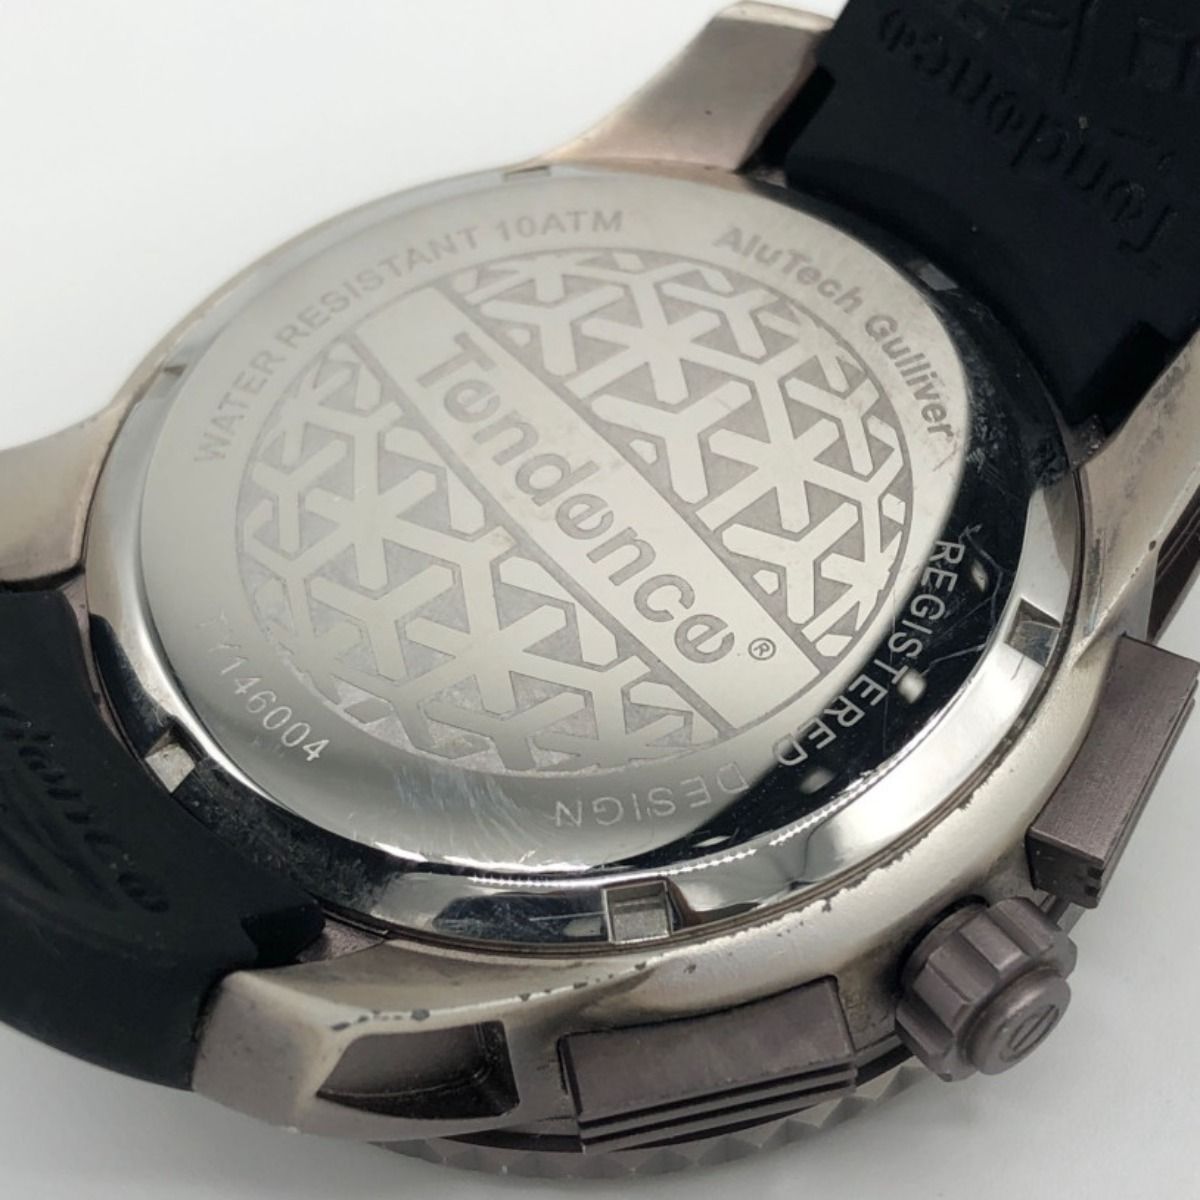 〇〇TENDENCE テンデンス メンズ 腕時計 アルテックガリバー TY146004 ブラック